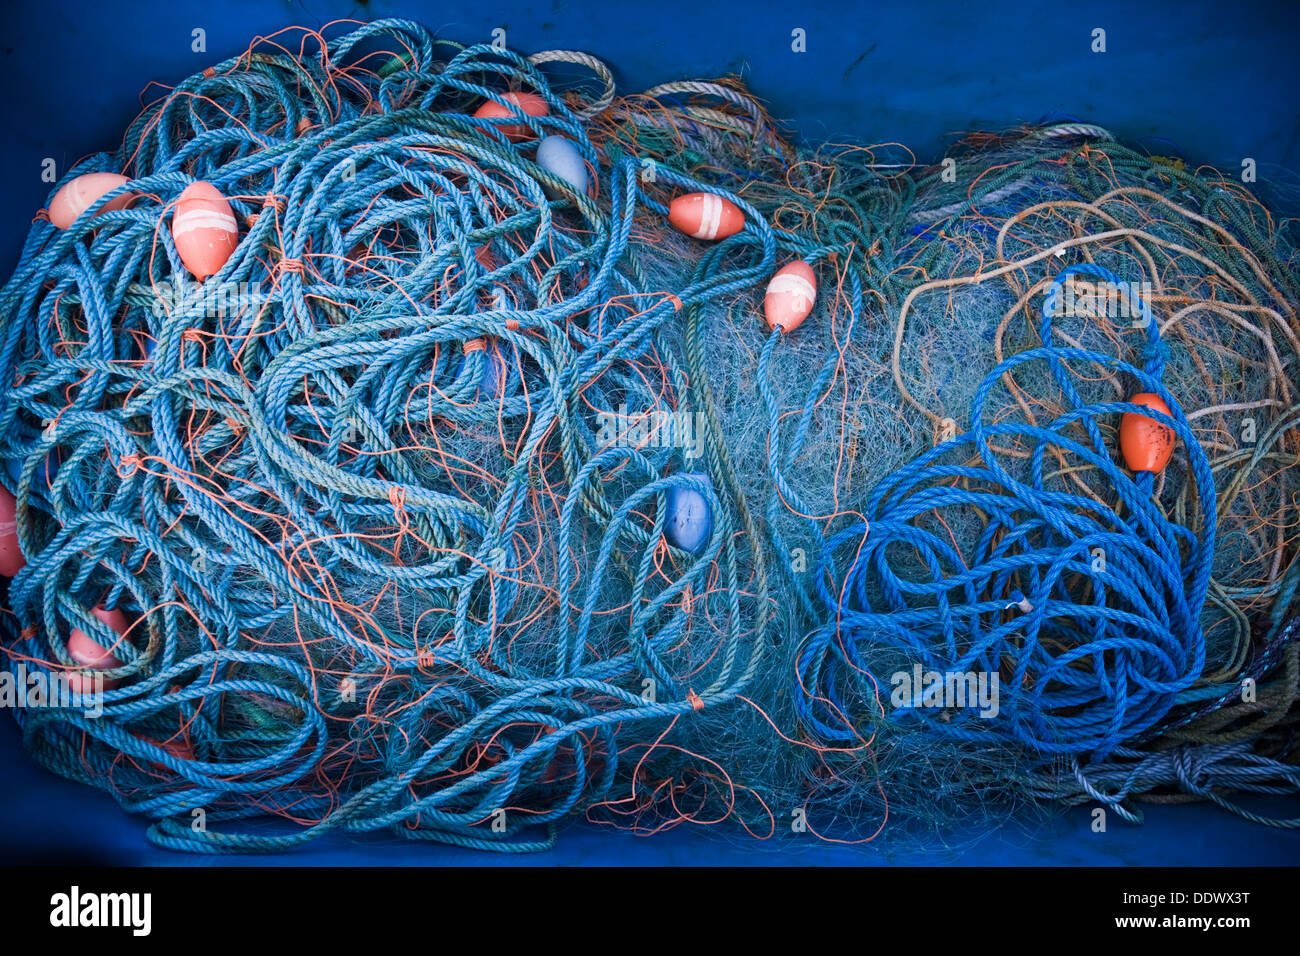 Close-up di una grande rete da pesca raccolse in un blu contenitore in plastica. Foto Stock